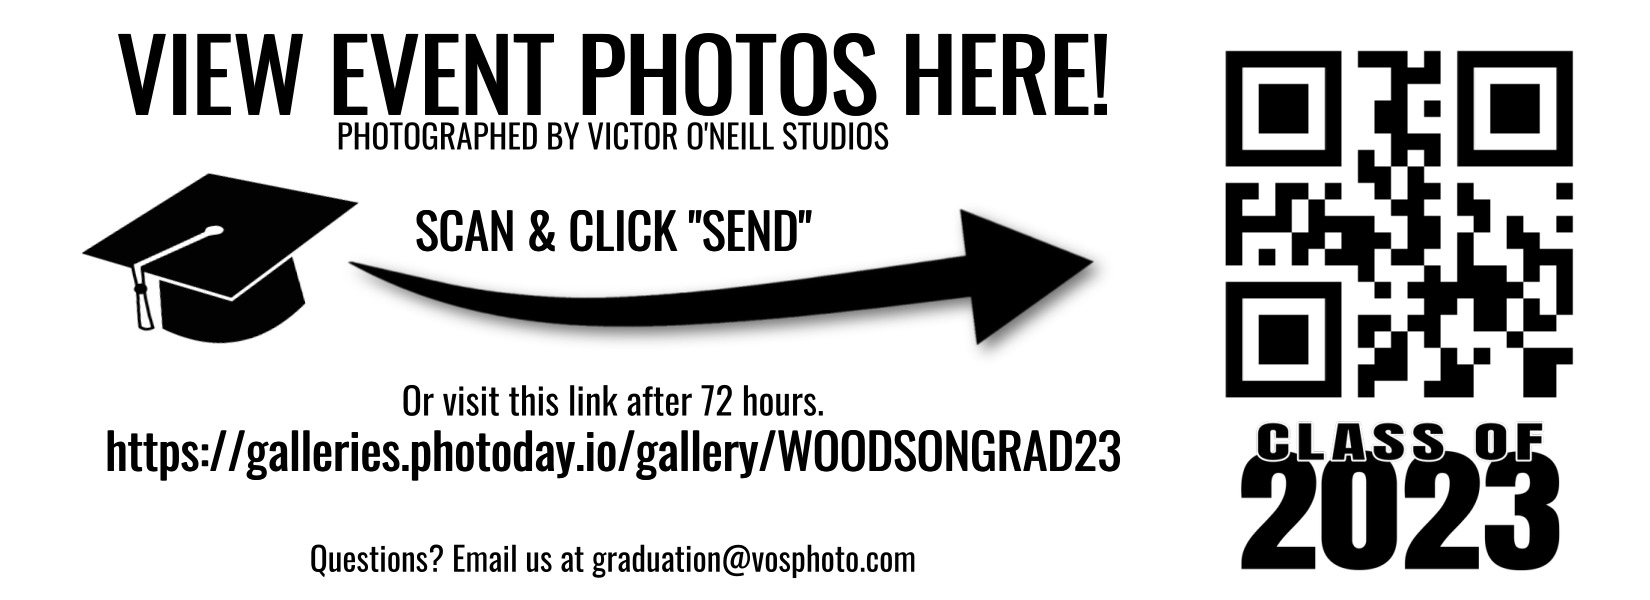 Preregister for Graduation Pictures!